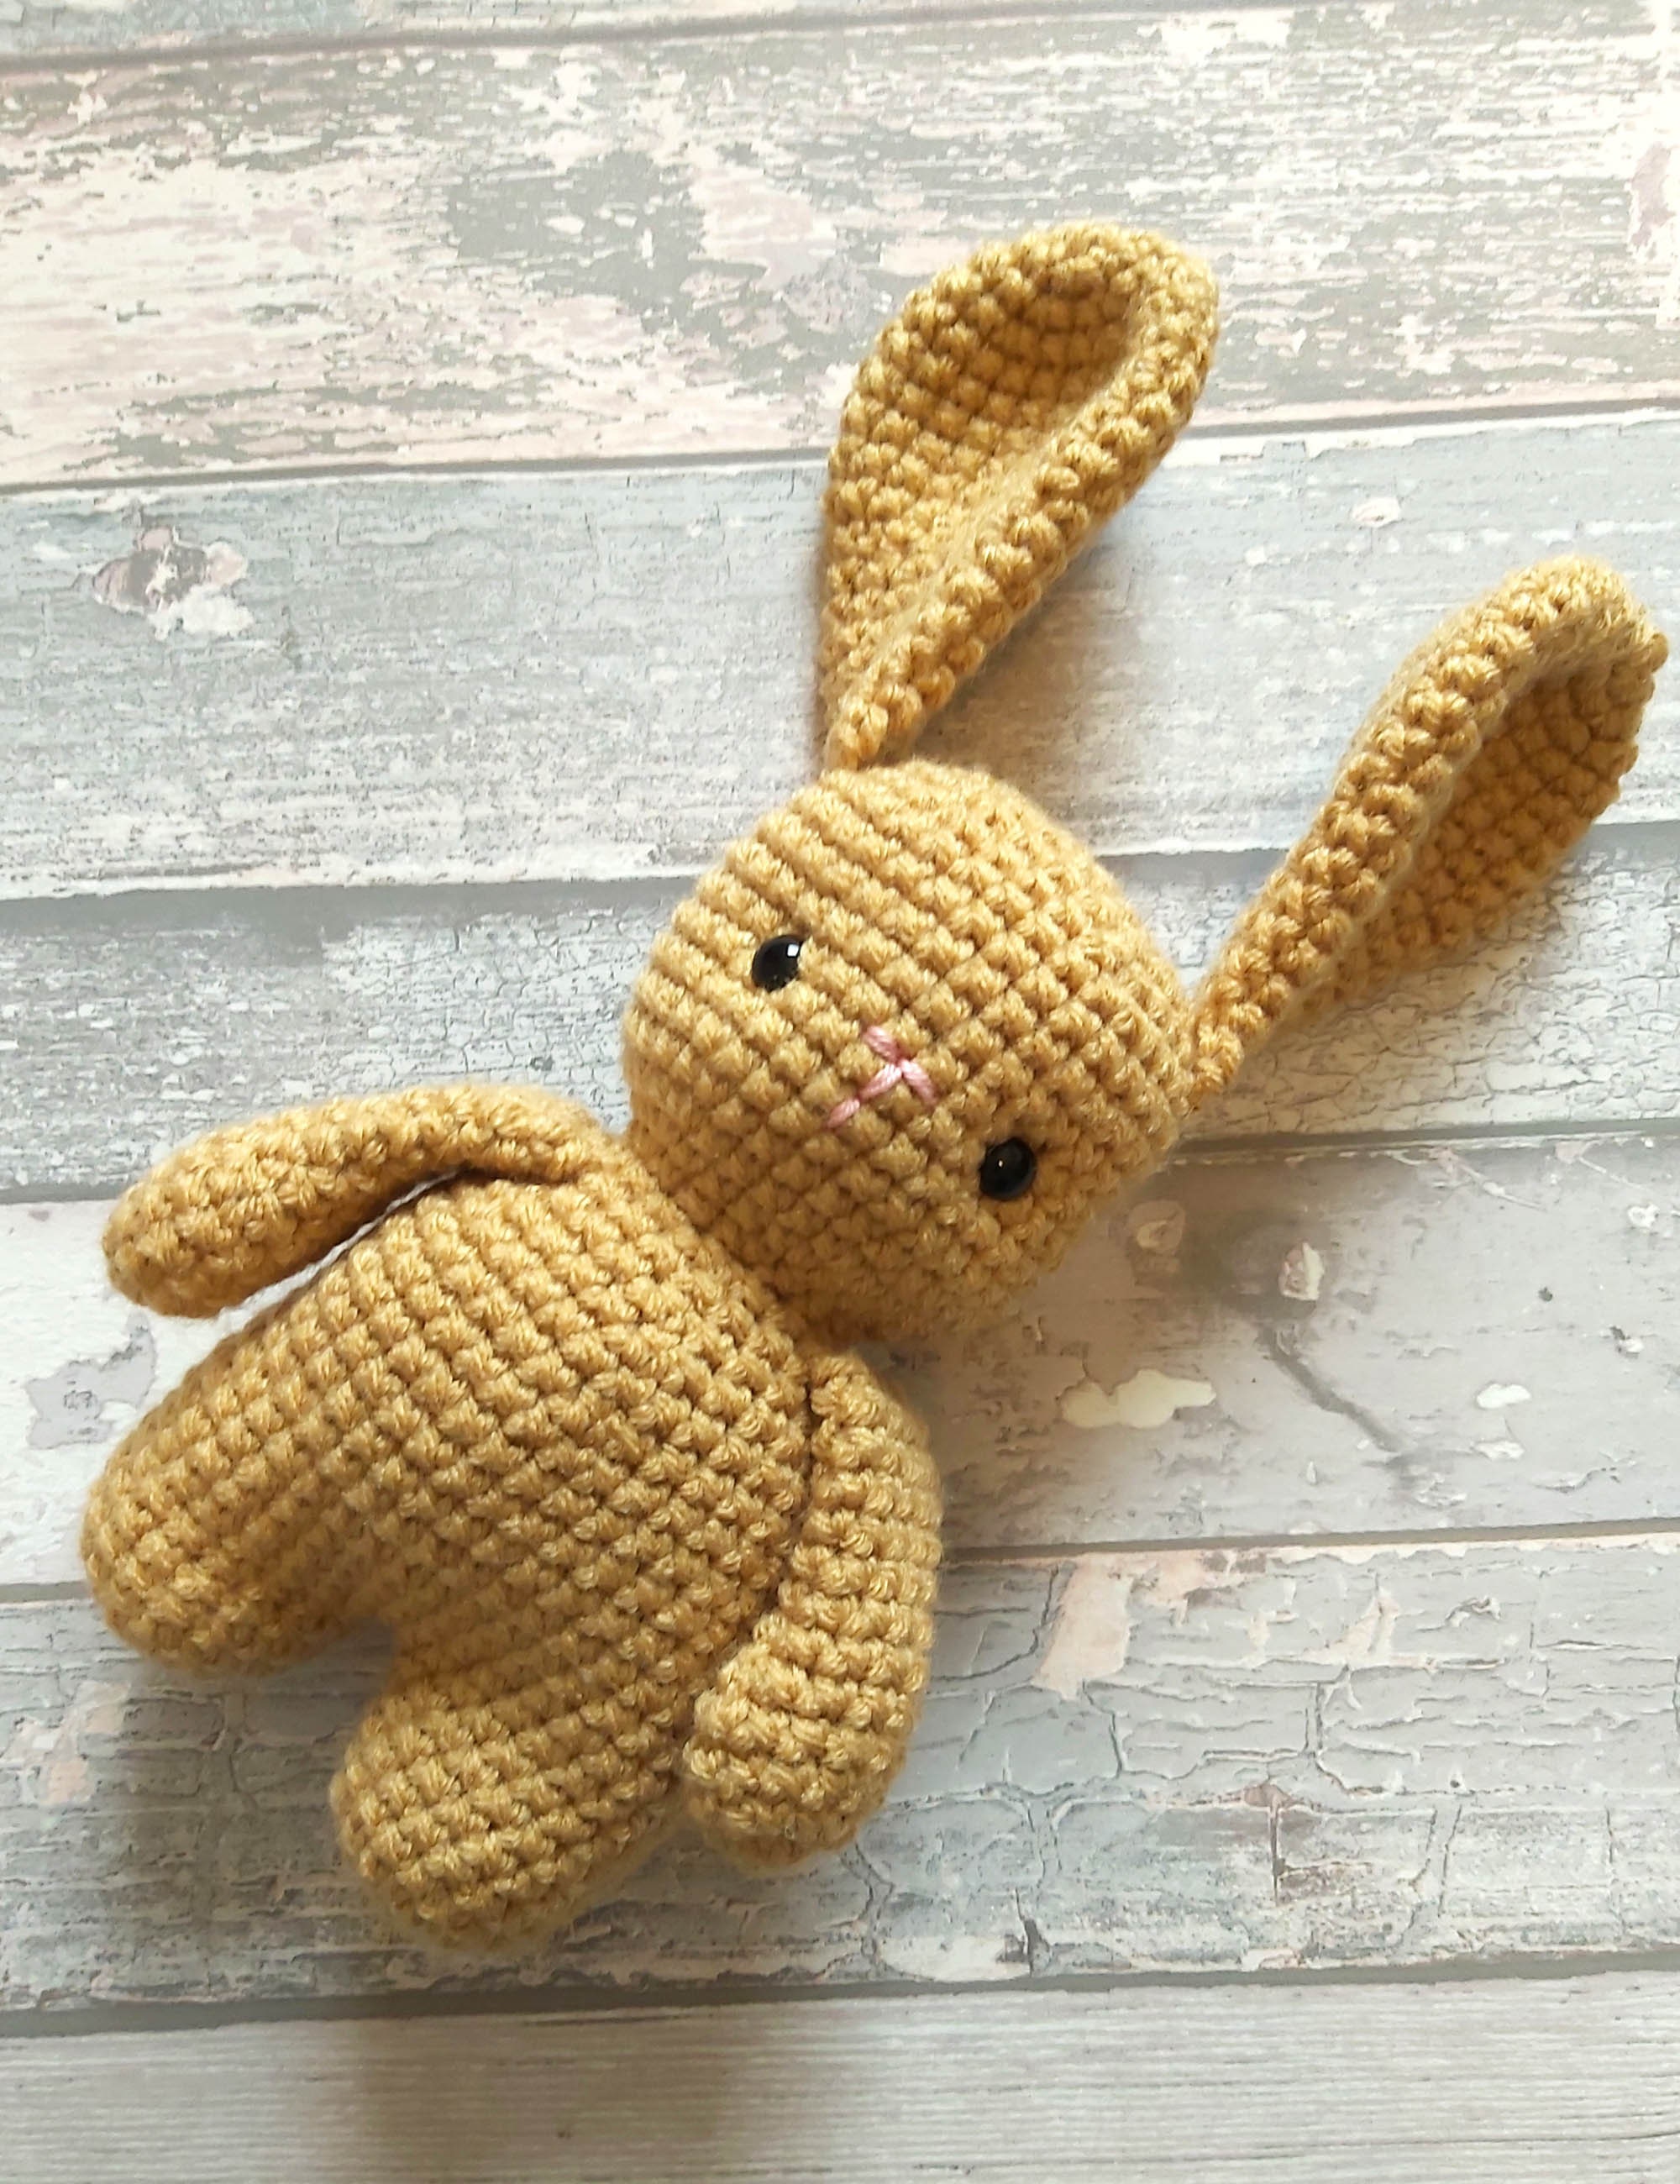 Cute Crochet Chenille Bunny Amigurumi Free Pattern – Amigurumi